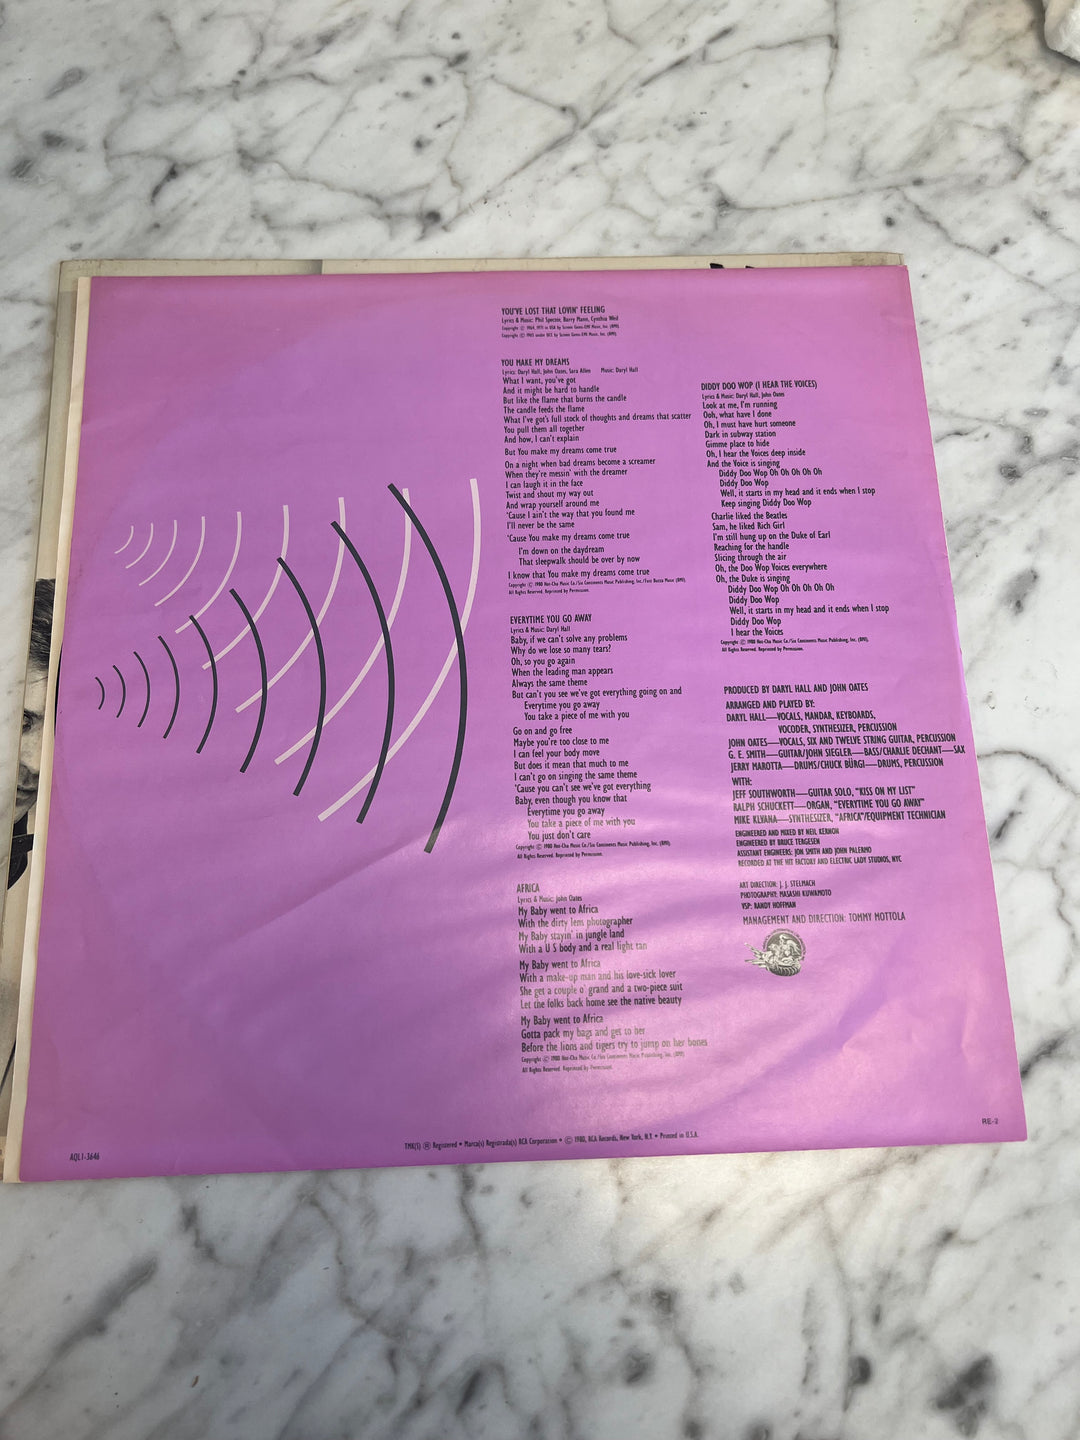 Daryl Hall and John Oates - Voices Vinyl Record AQL13646